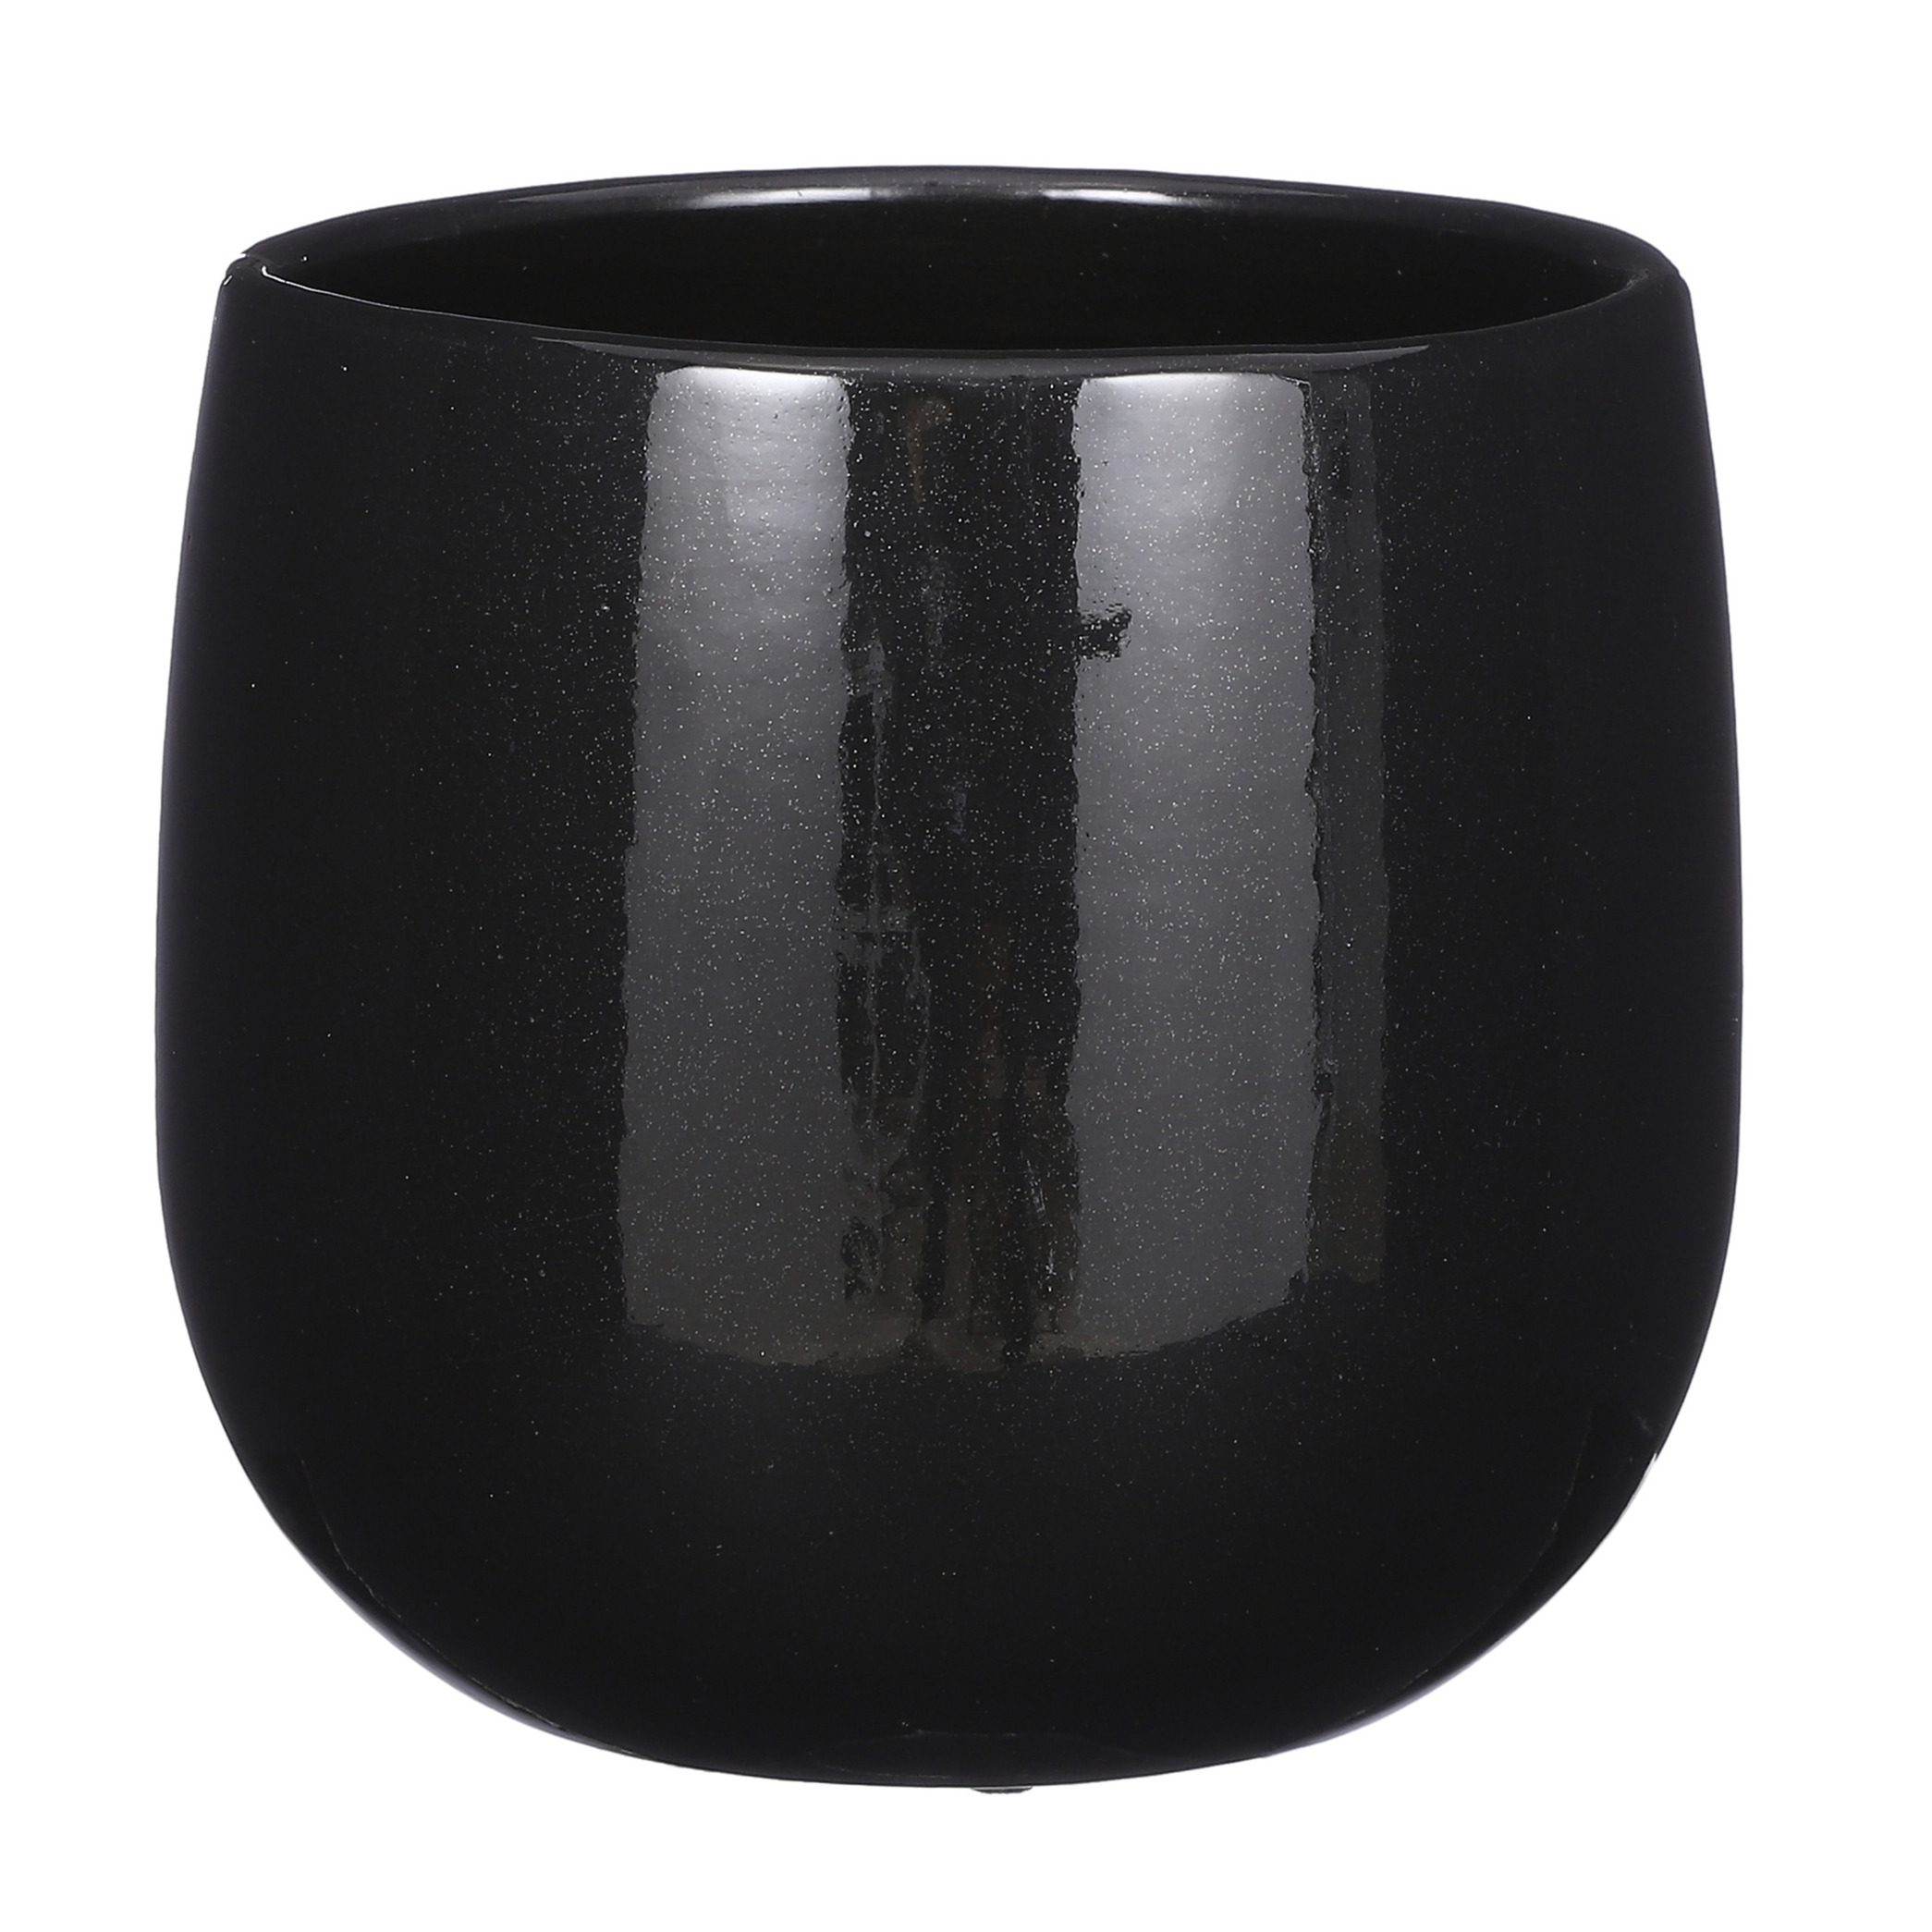 Plantenpot-bloempot keramiek zwart speels licht gevlekt patroon D21-H19 cm